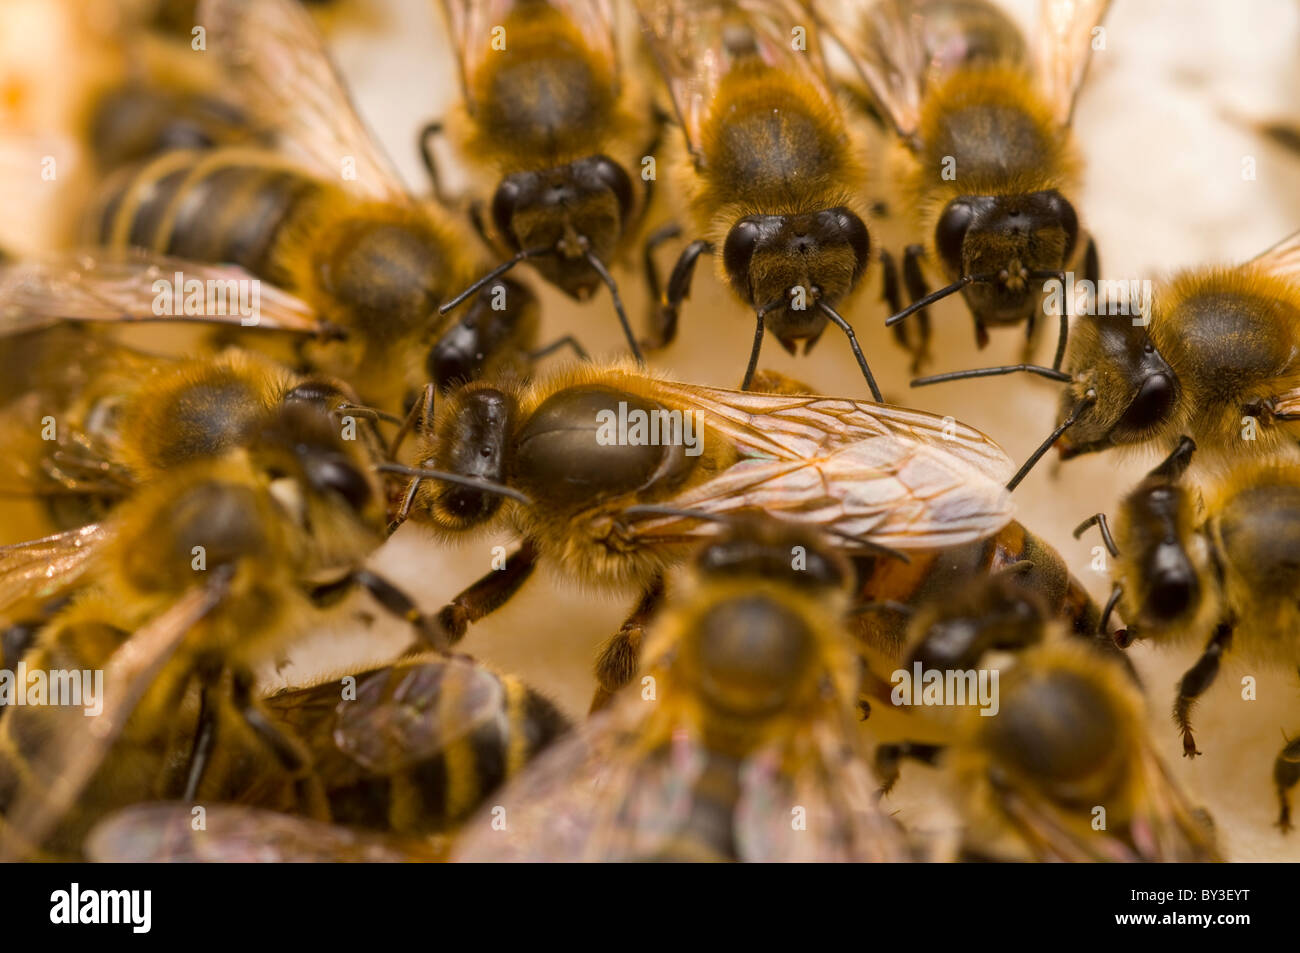 Abeja reina las abejas melíferas Apis mellifera Foto de stock